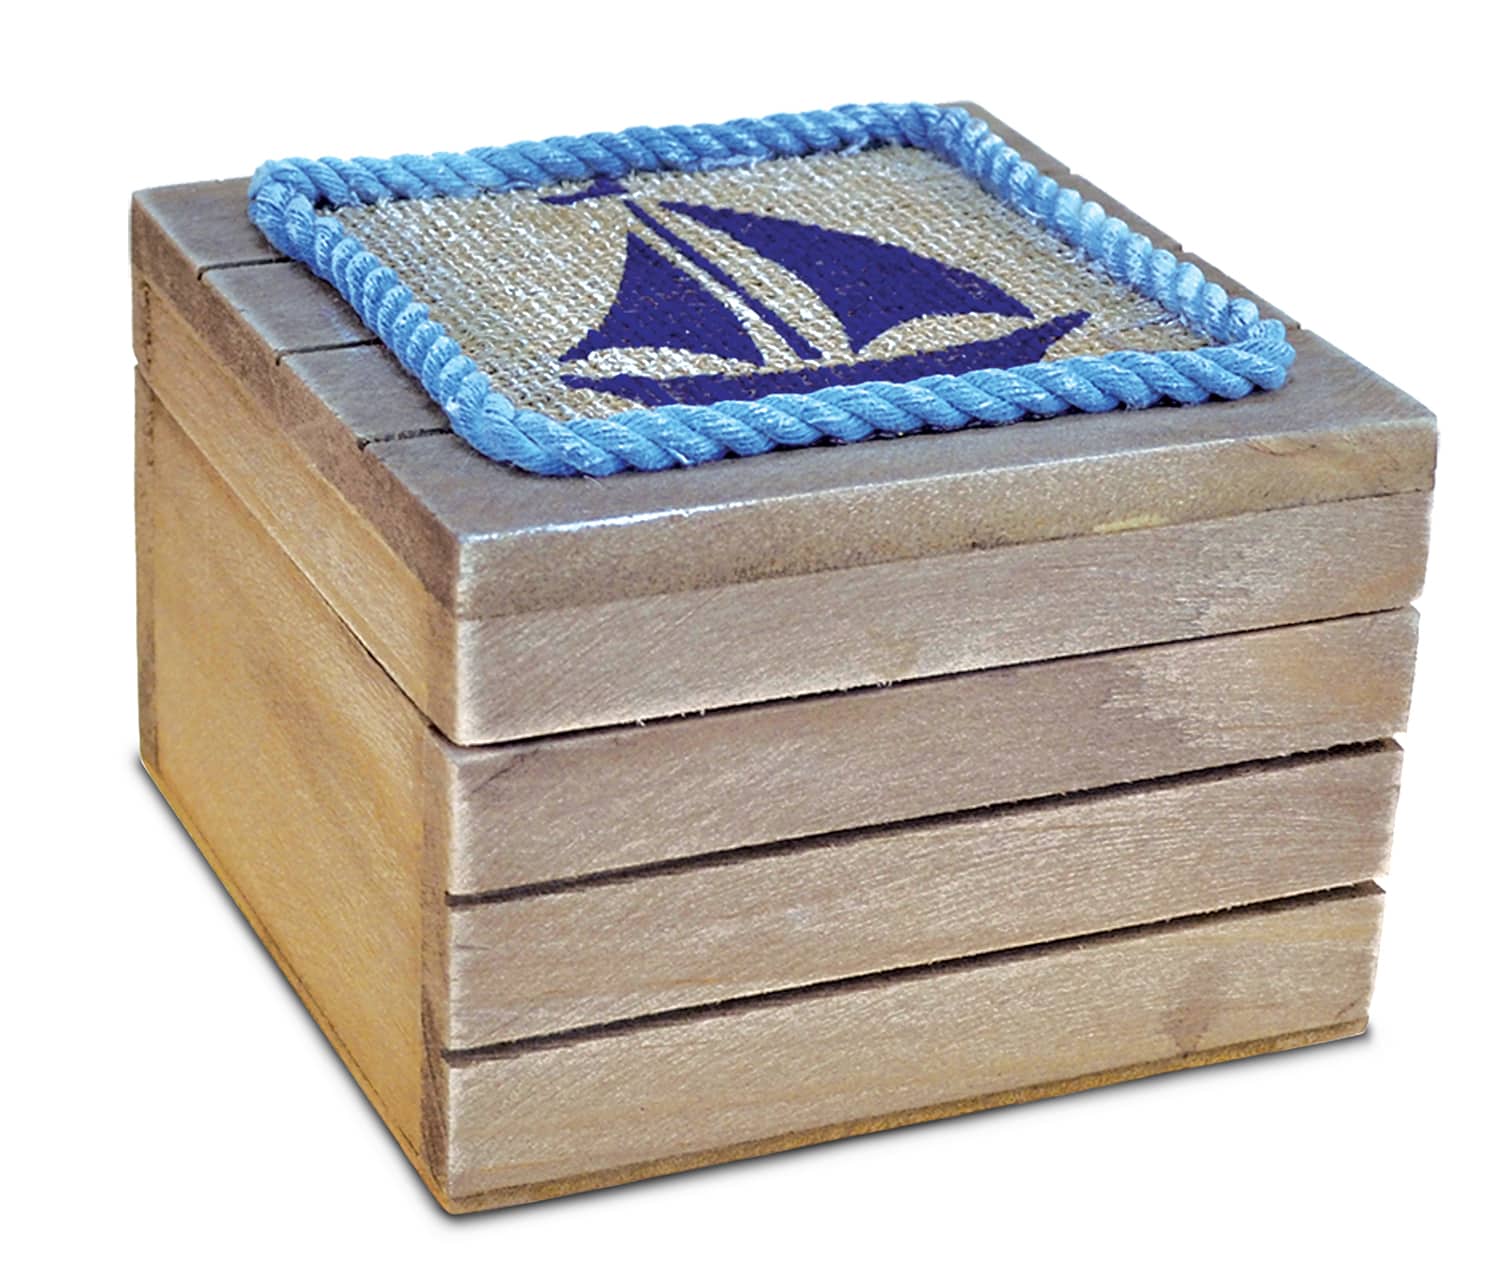 Evian Large Square Jewelry Box – Nautical Decor